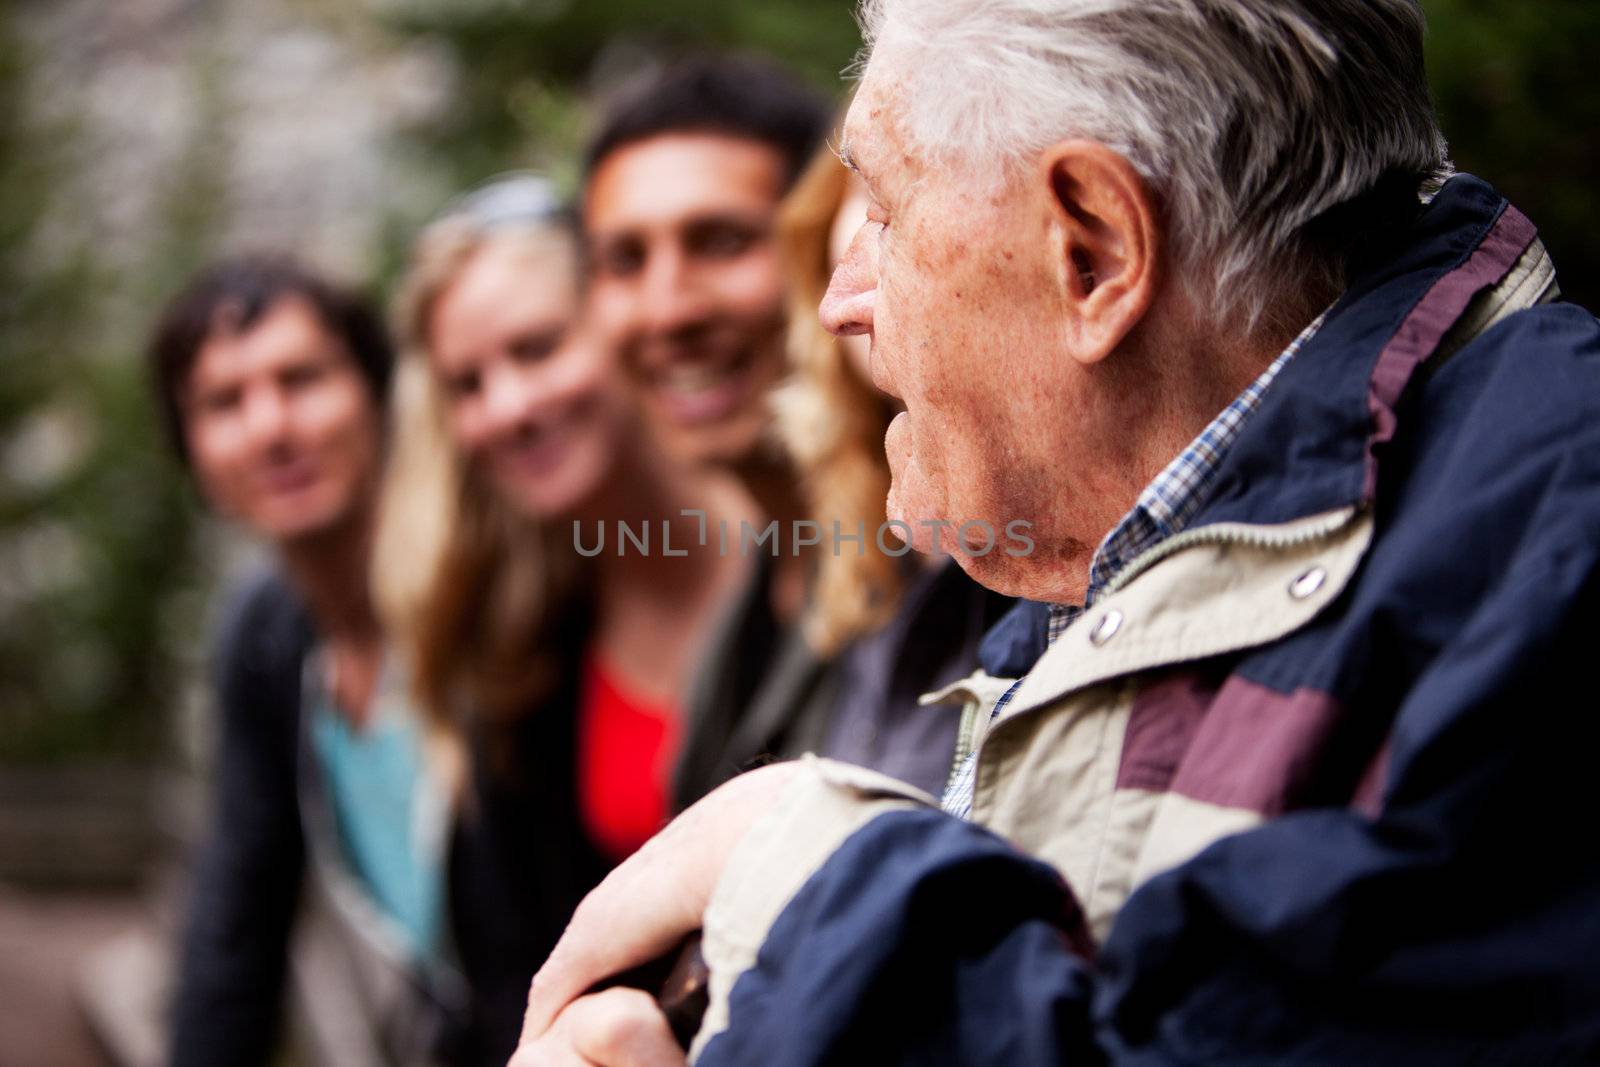 An elderly man telling stories